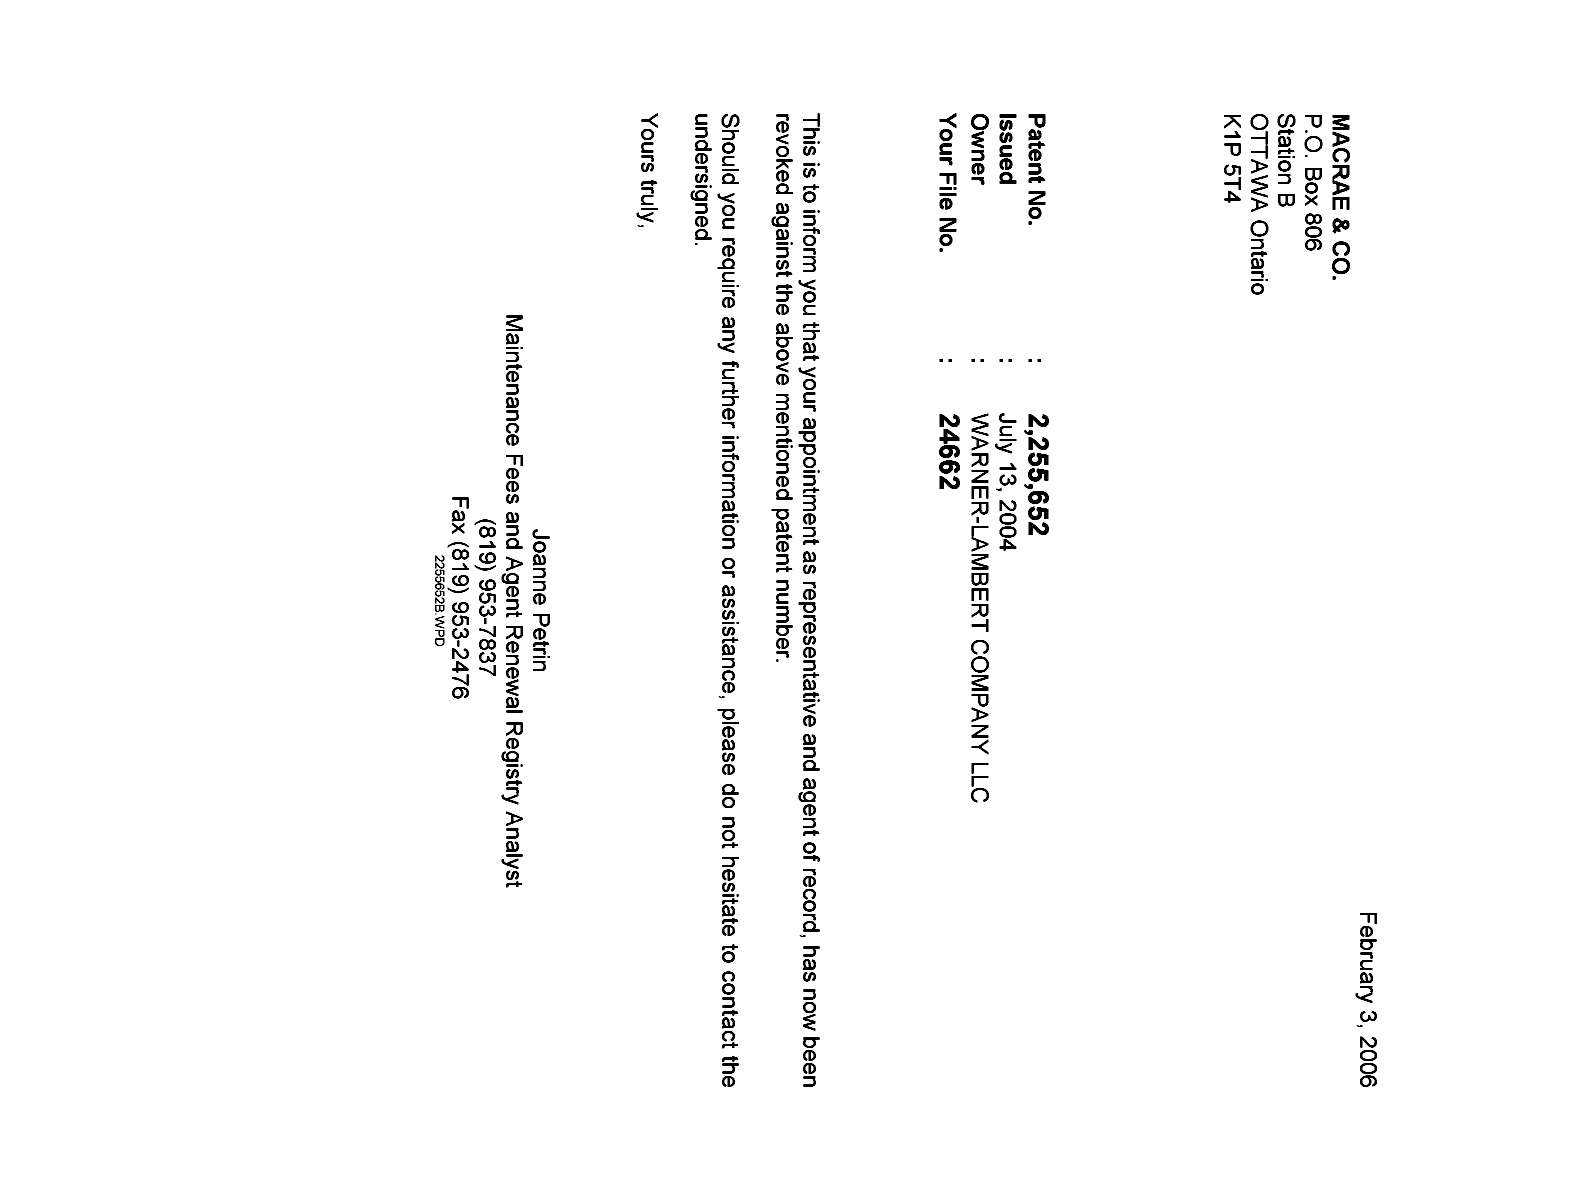 Canadian Patent Document 2255652. Correspondence 20051203. Image 1 of 1